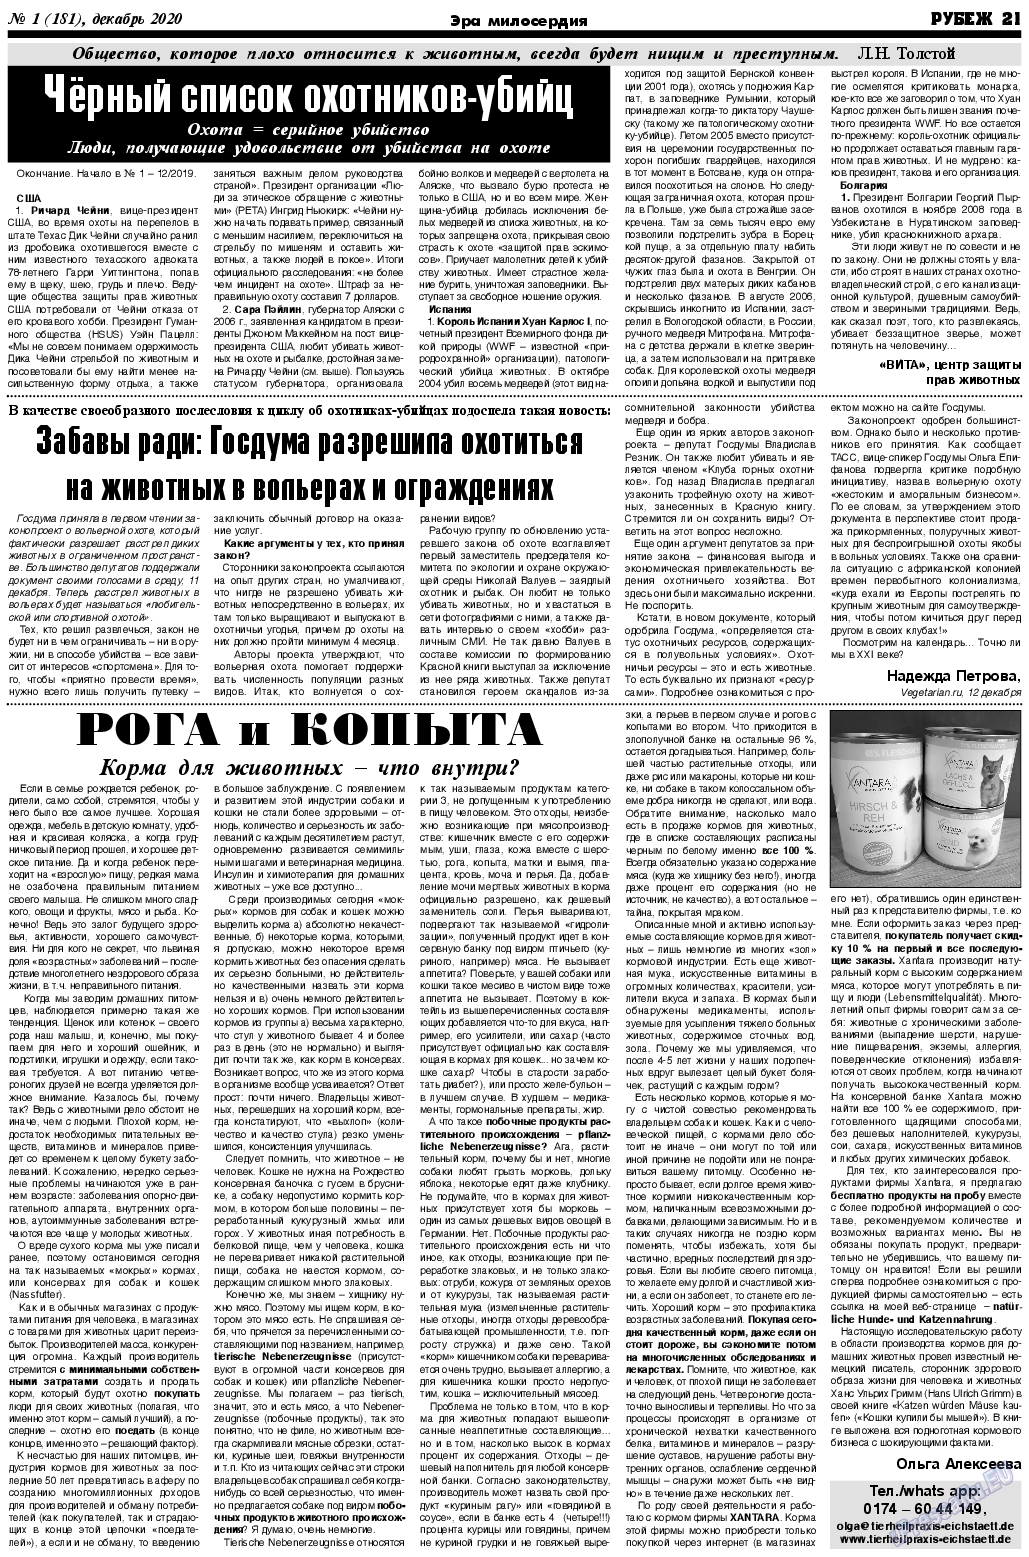 Рубеж, газета. 2020 №1 стр.21